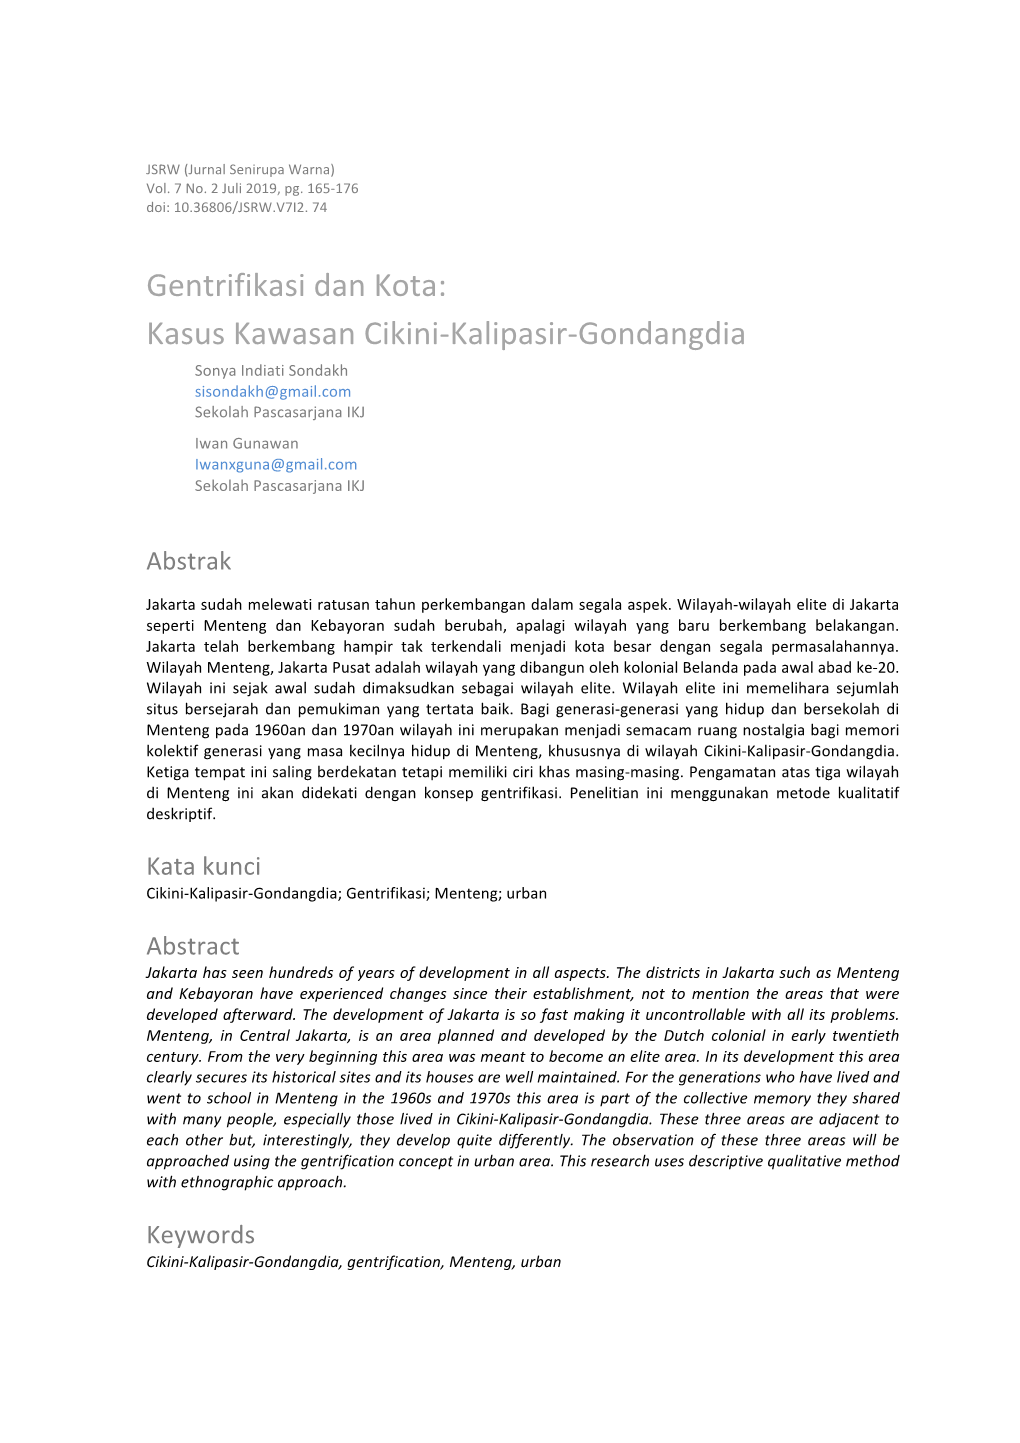 Gentrifikasi Dan Kota: Kasus Kawasan Cikini-Kalipasir-Gondangdia